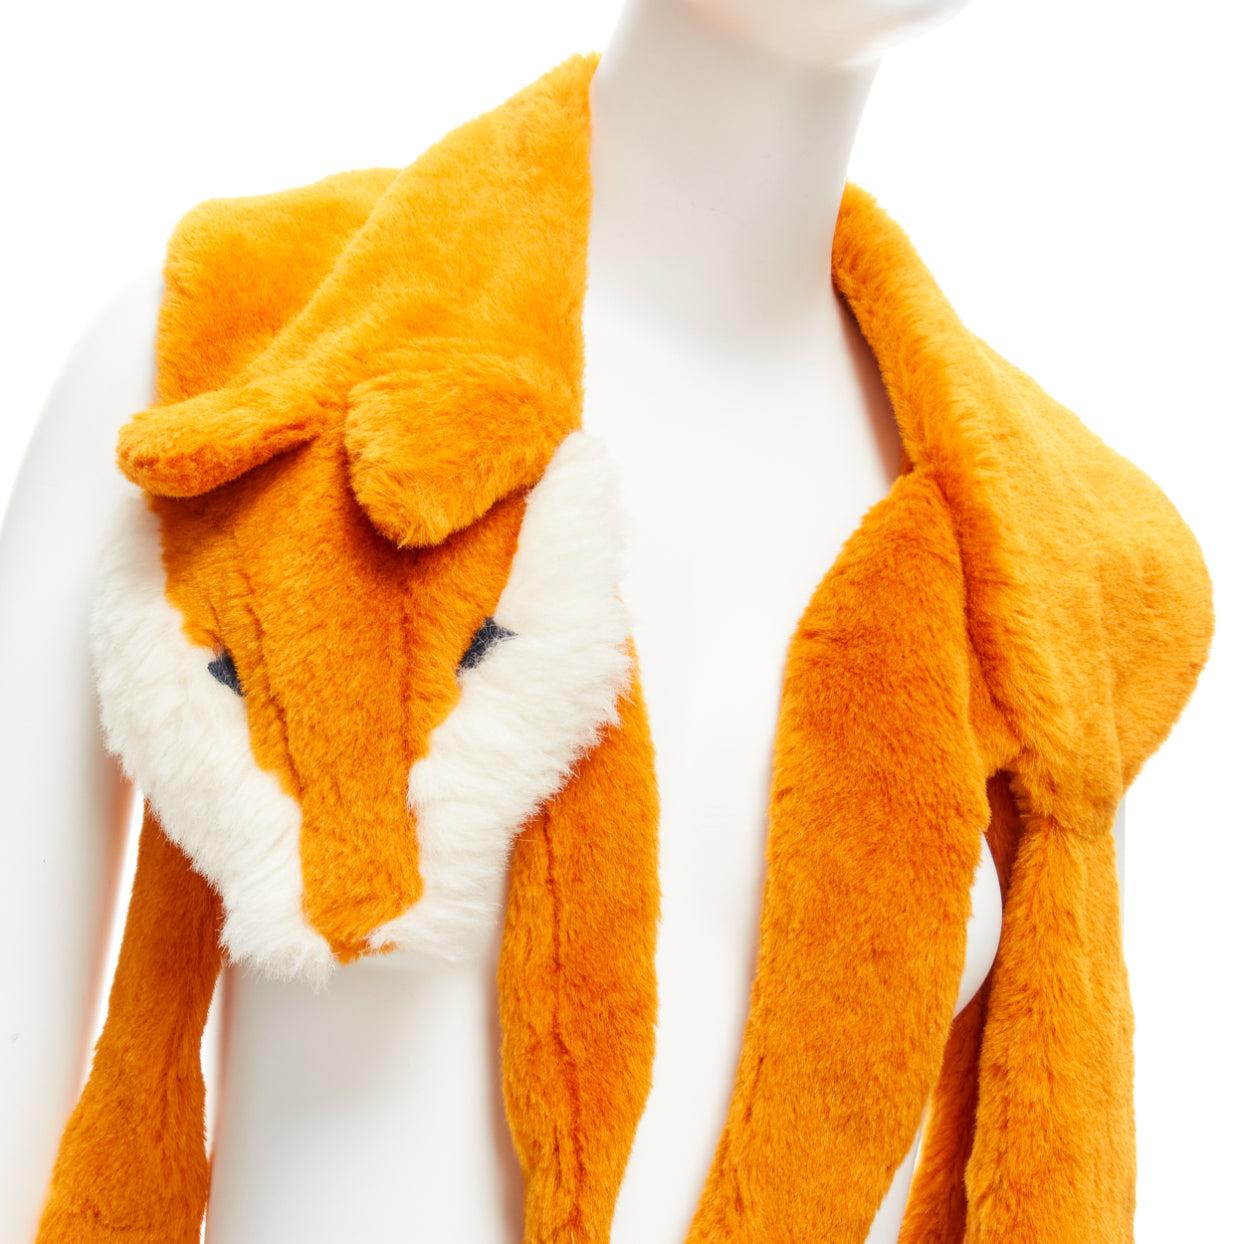 rare VIKA GAZINSKAYA orange alpaca mohair stuffed toy fox scarf
Reference: BSHW/A00078
Brand: Vika Gazinskaya
Collection: Runway
Material: Alpaca, Mohair
Color: Orange, White
Pattern: Solid
Lining: Orange Fabric
Made in: